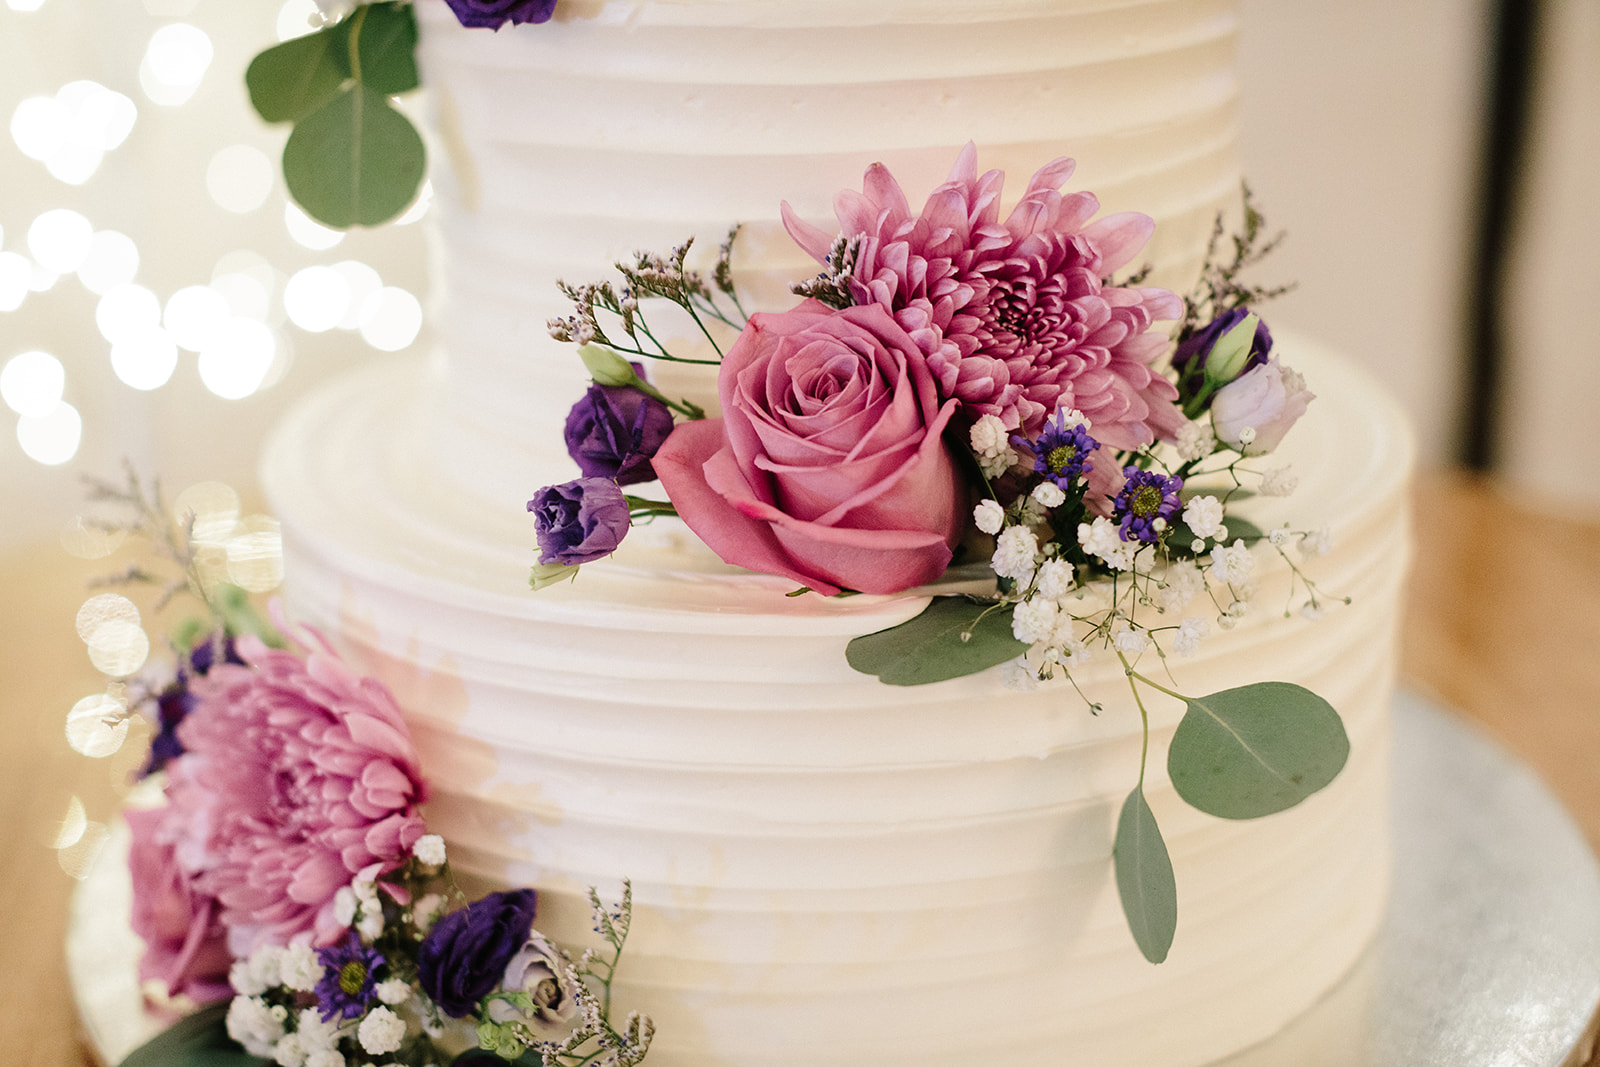 Flowers sitting on a wedding cake 